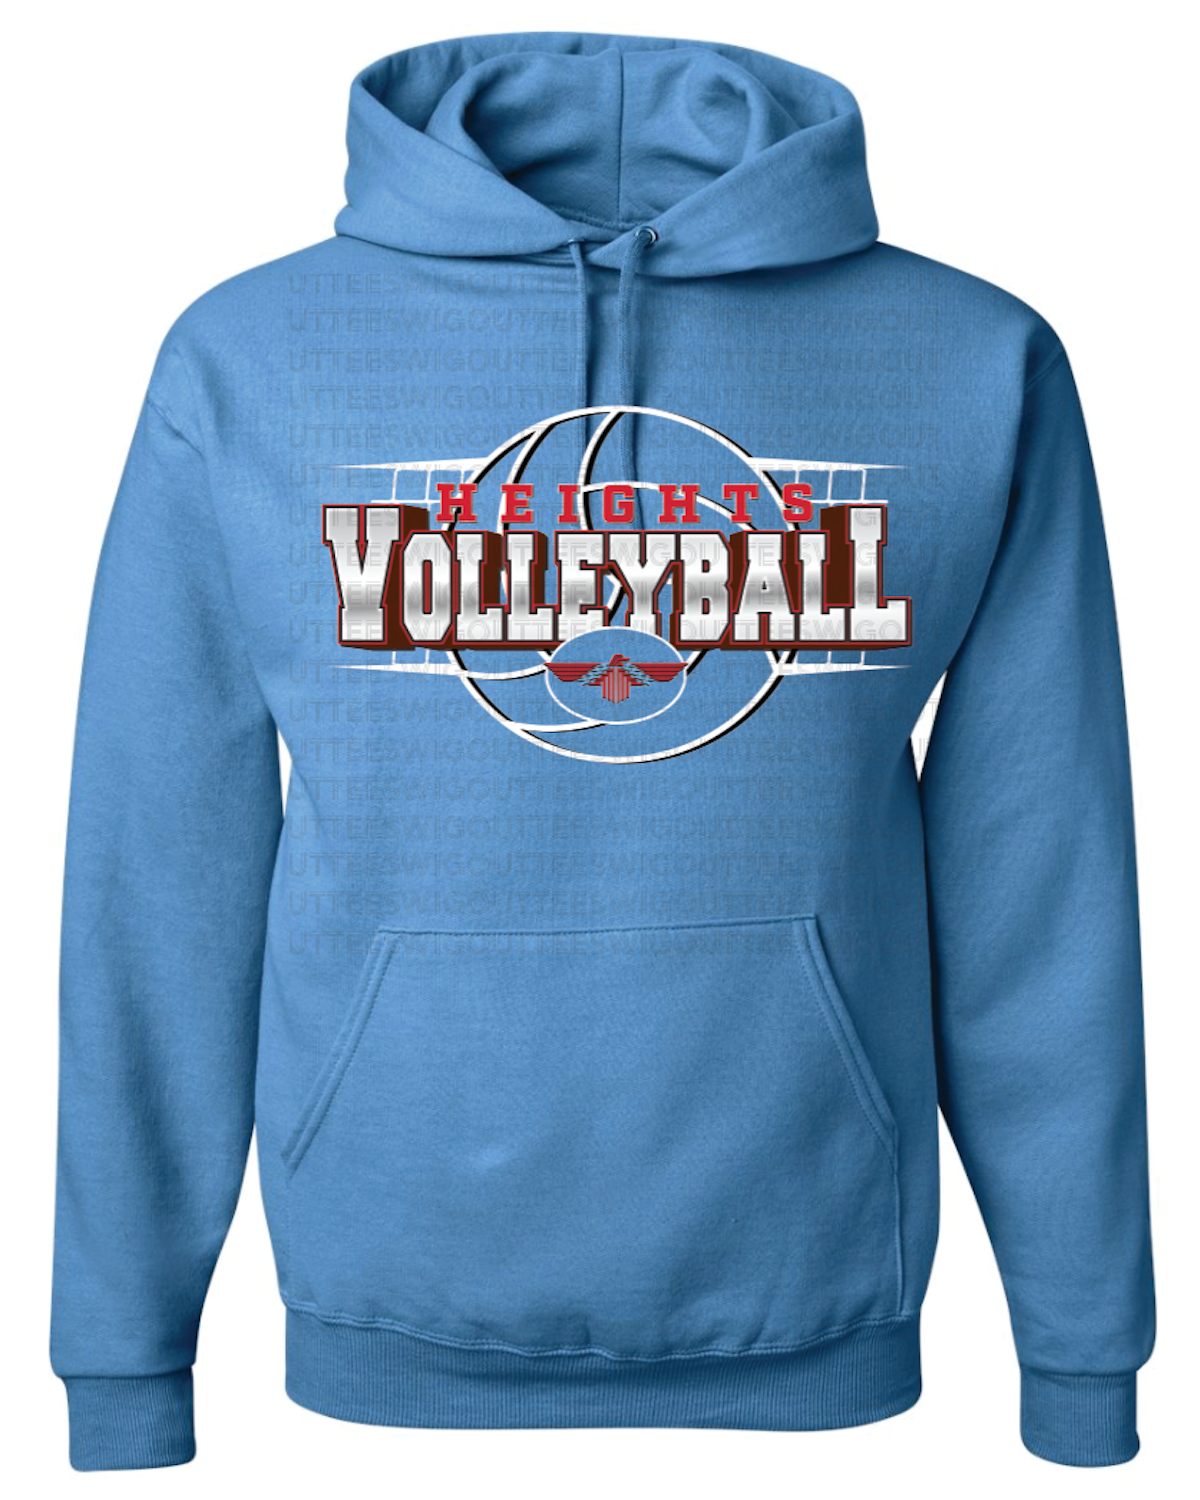 Heights Volleyball Jerzees Nublend Hooded Sweatshirt